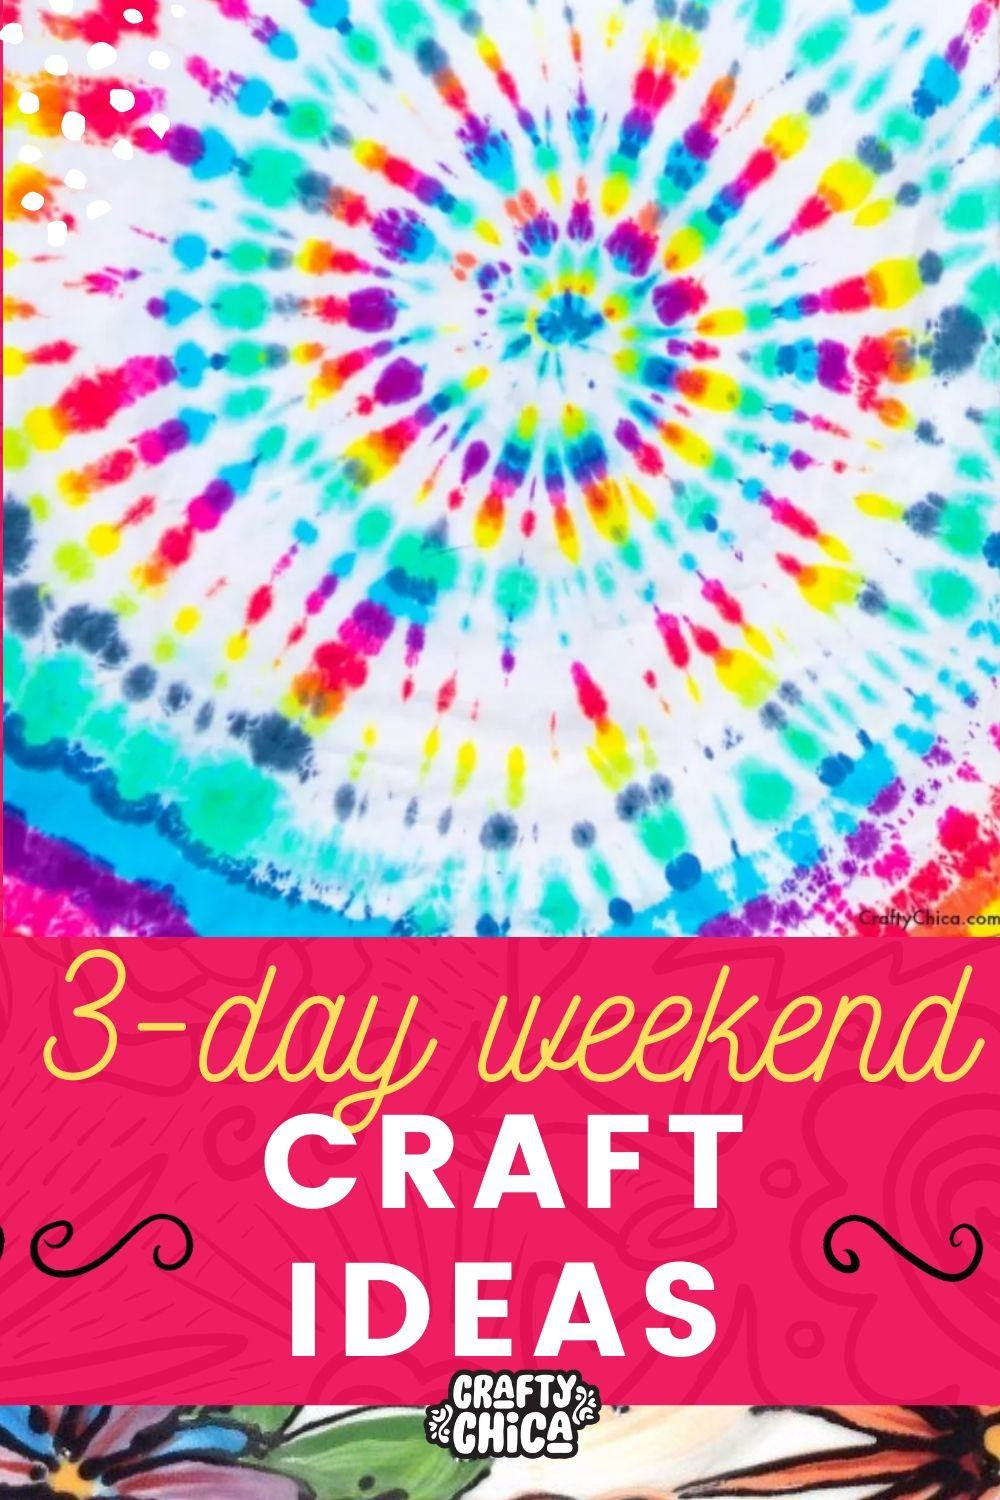 The BEST three-day weekend craft ideas! #craftychica #craftideas